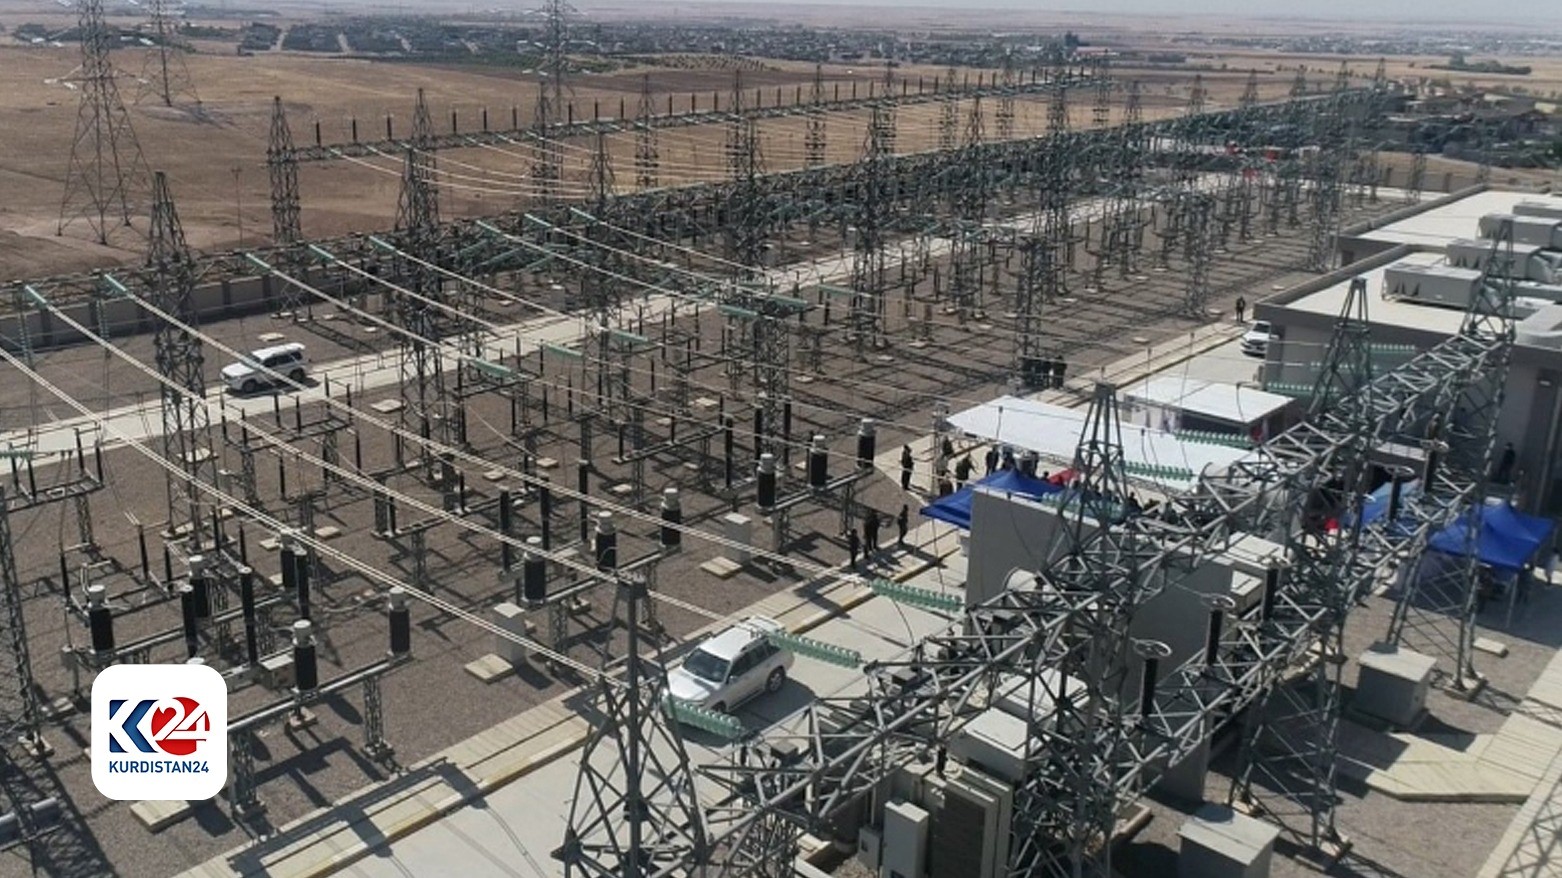 Power Station (Photo: Kurdistan 24)